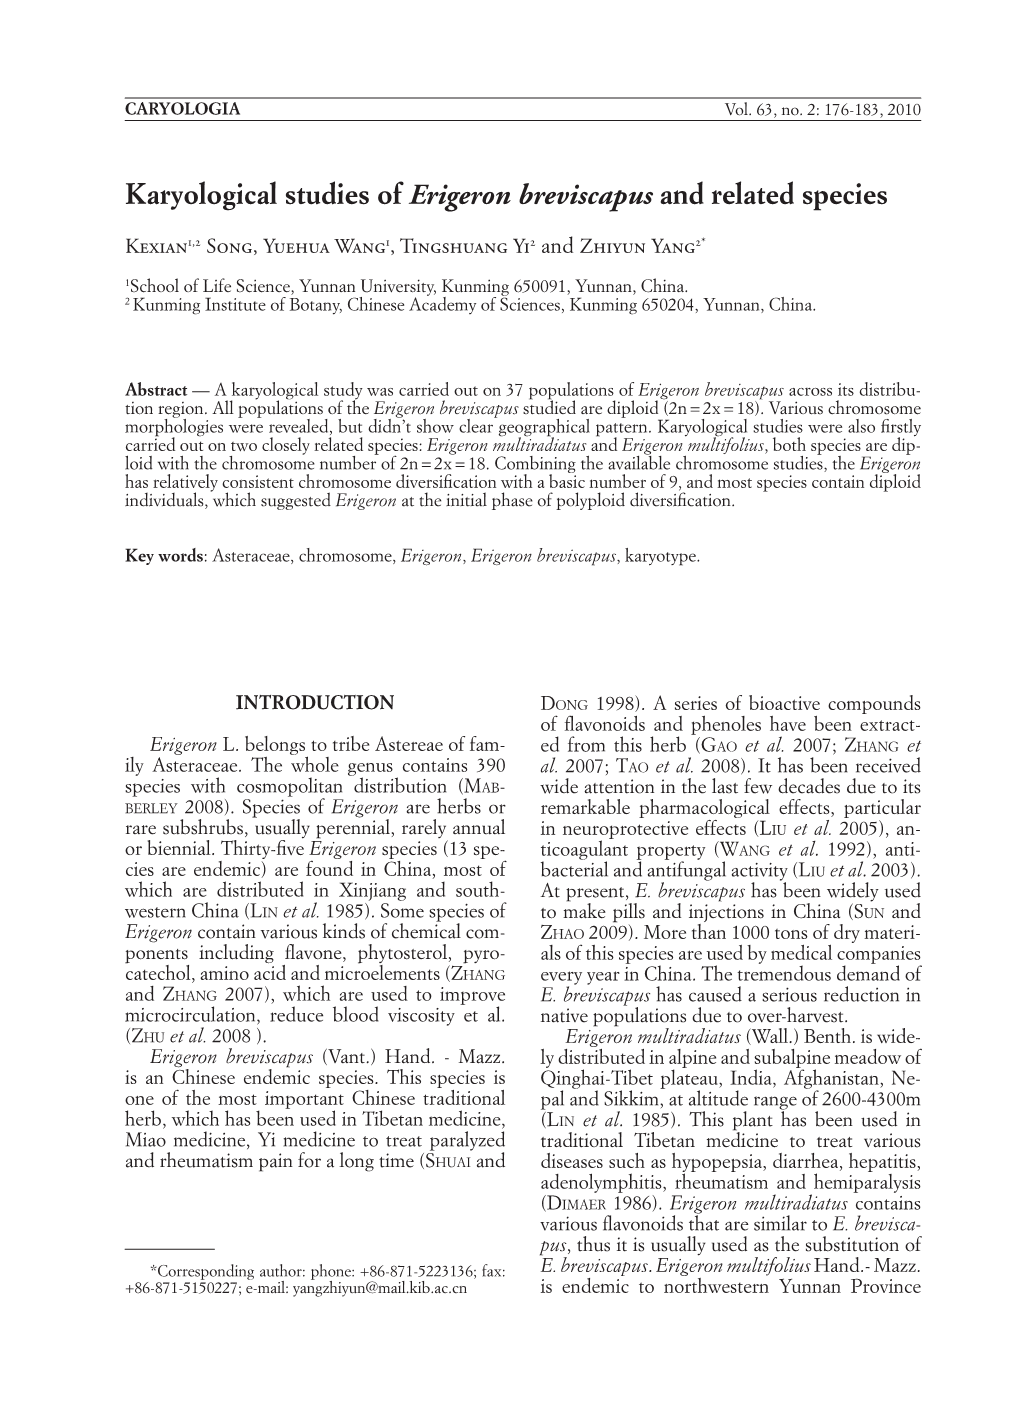 Karyological Studies of Erigeron Breviscapus and Related Species